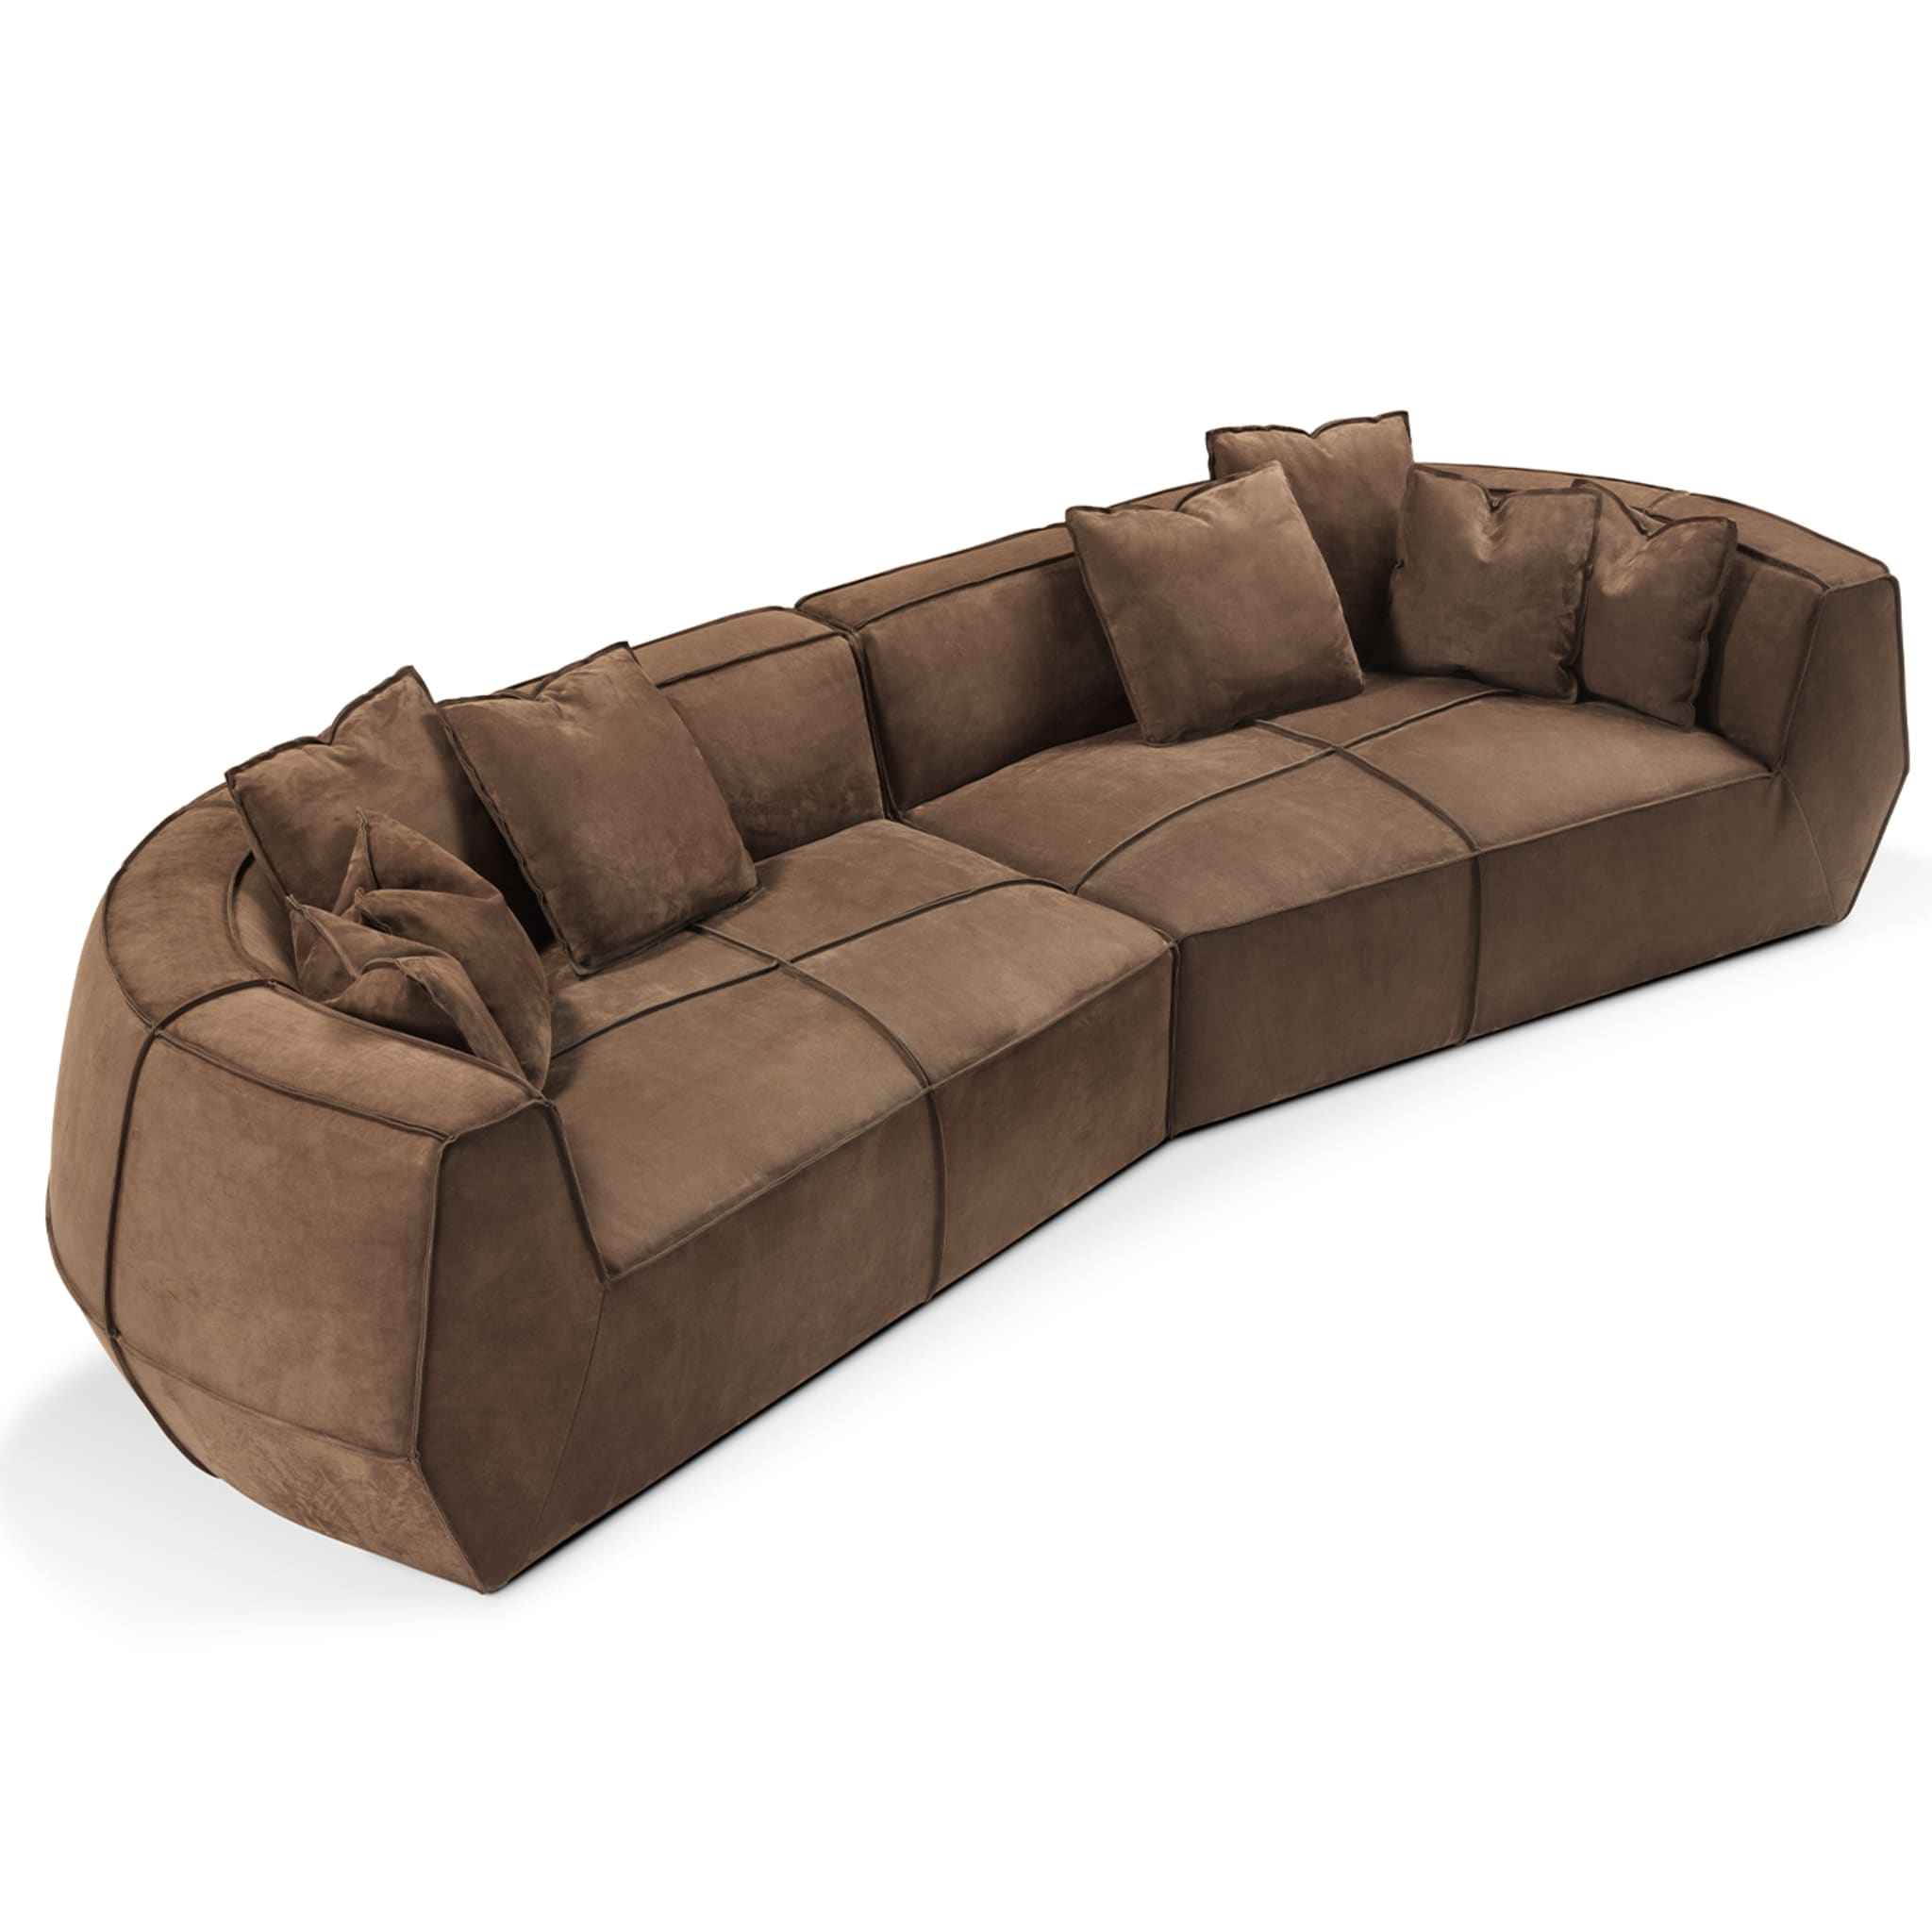 Infinito Medium Brown Sofa by Lorenza Bozzoli - Alternative view 2